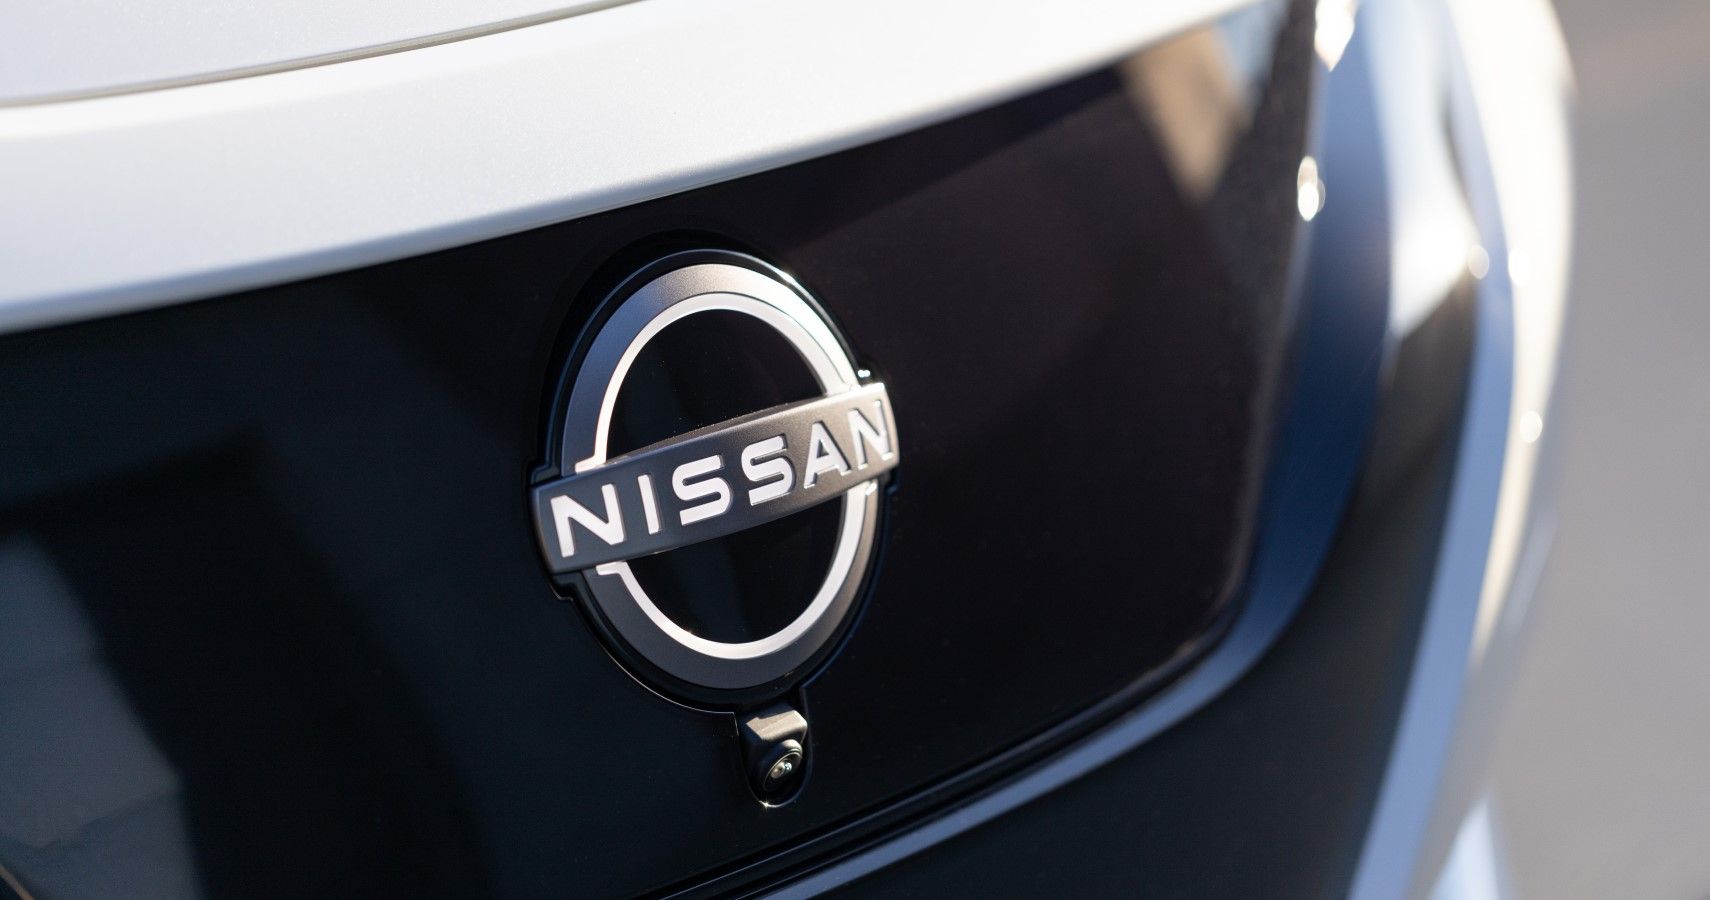 2023 Nissan LEAF front fascia logo close-up view